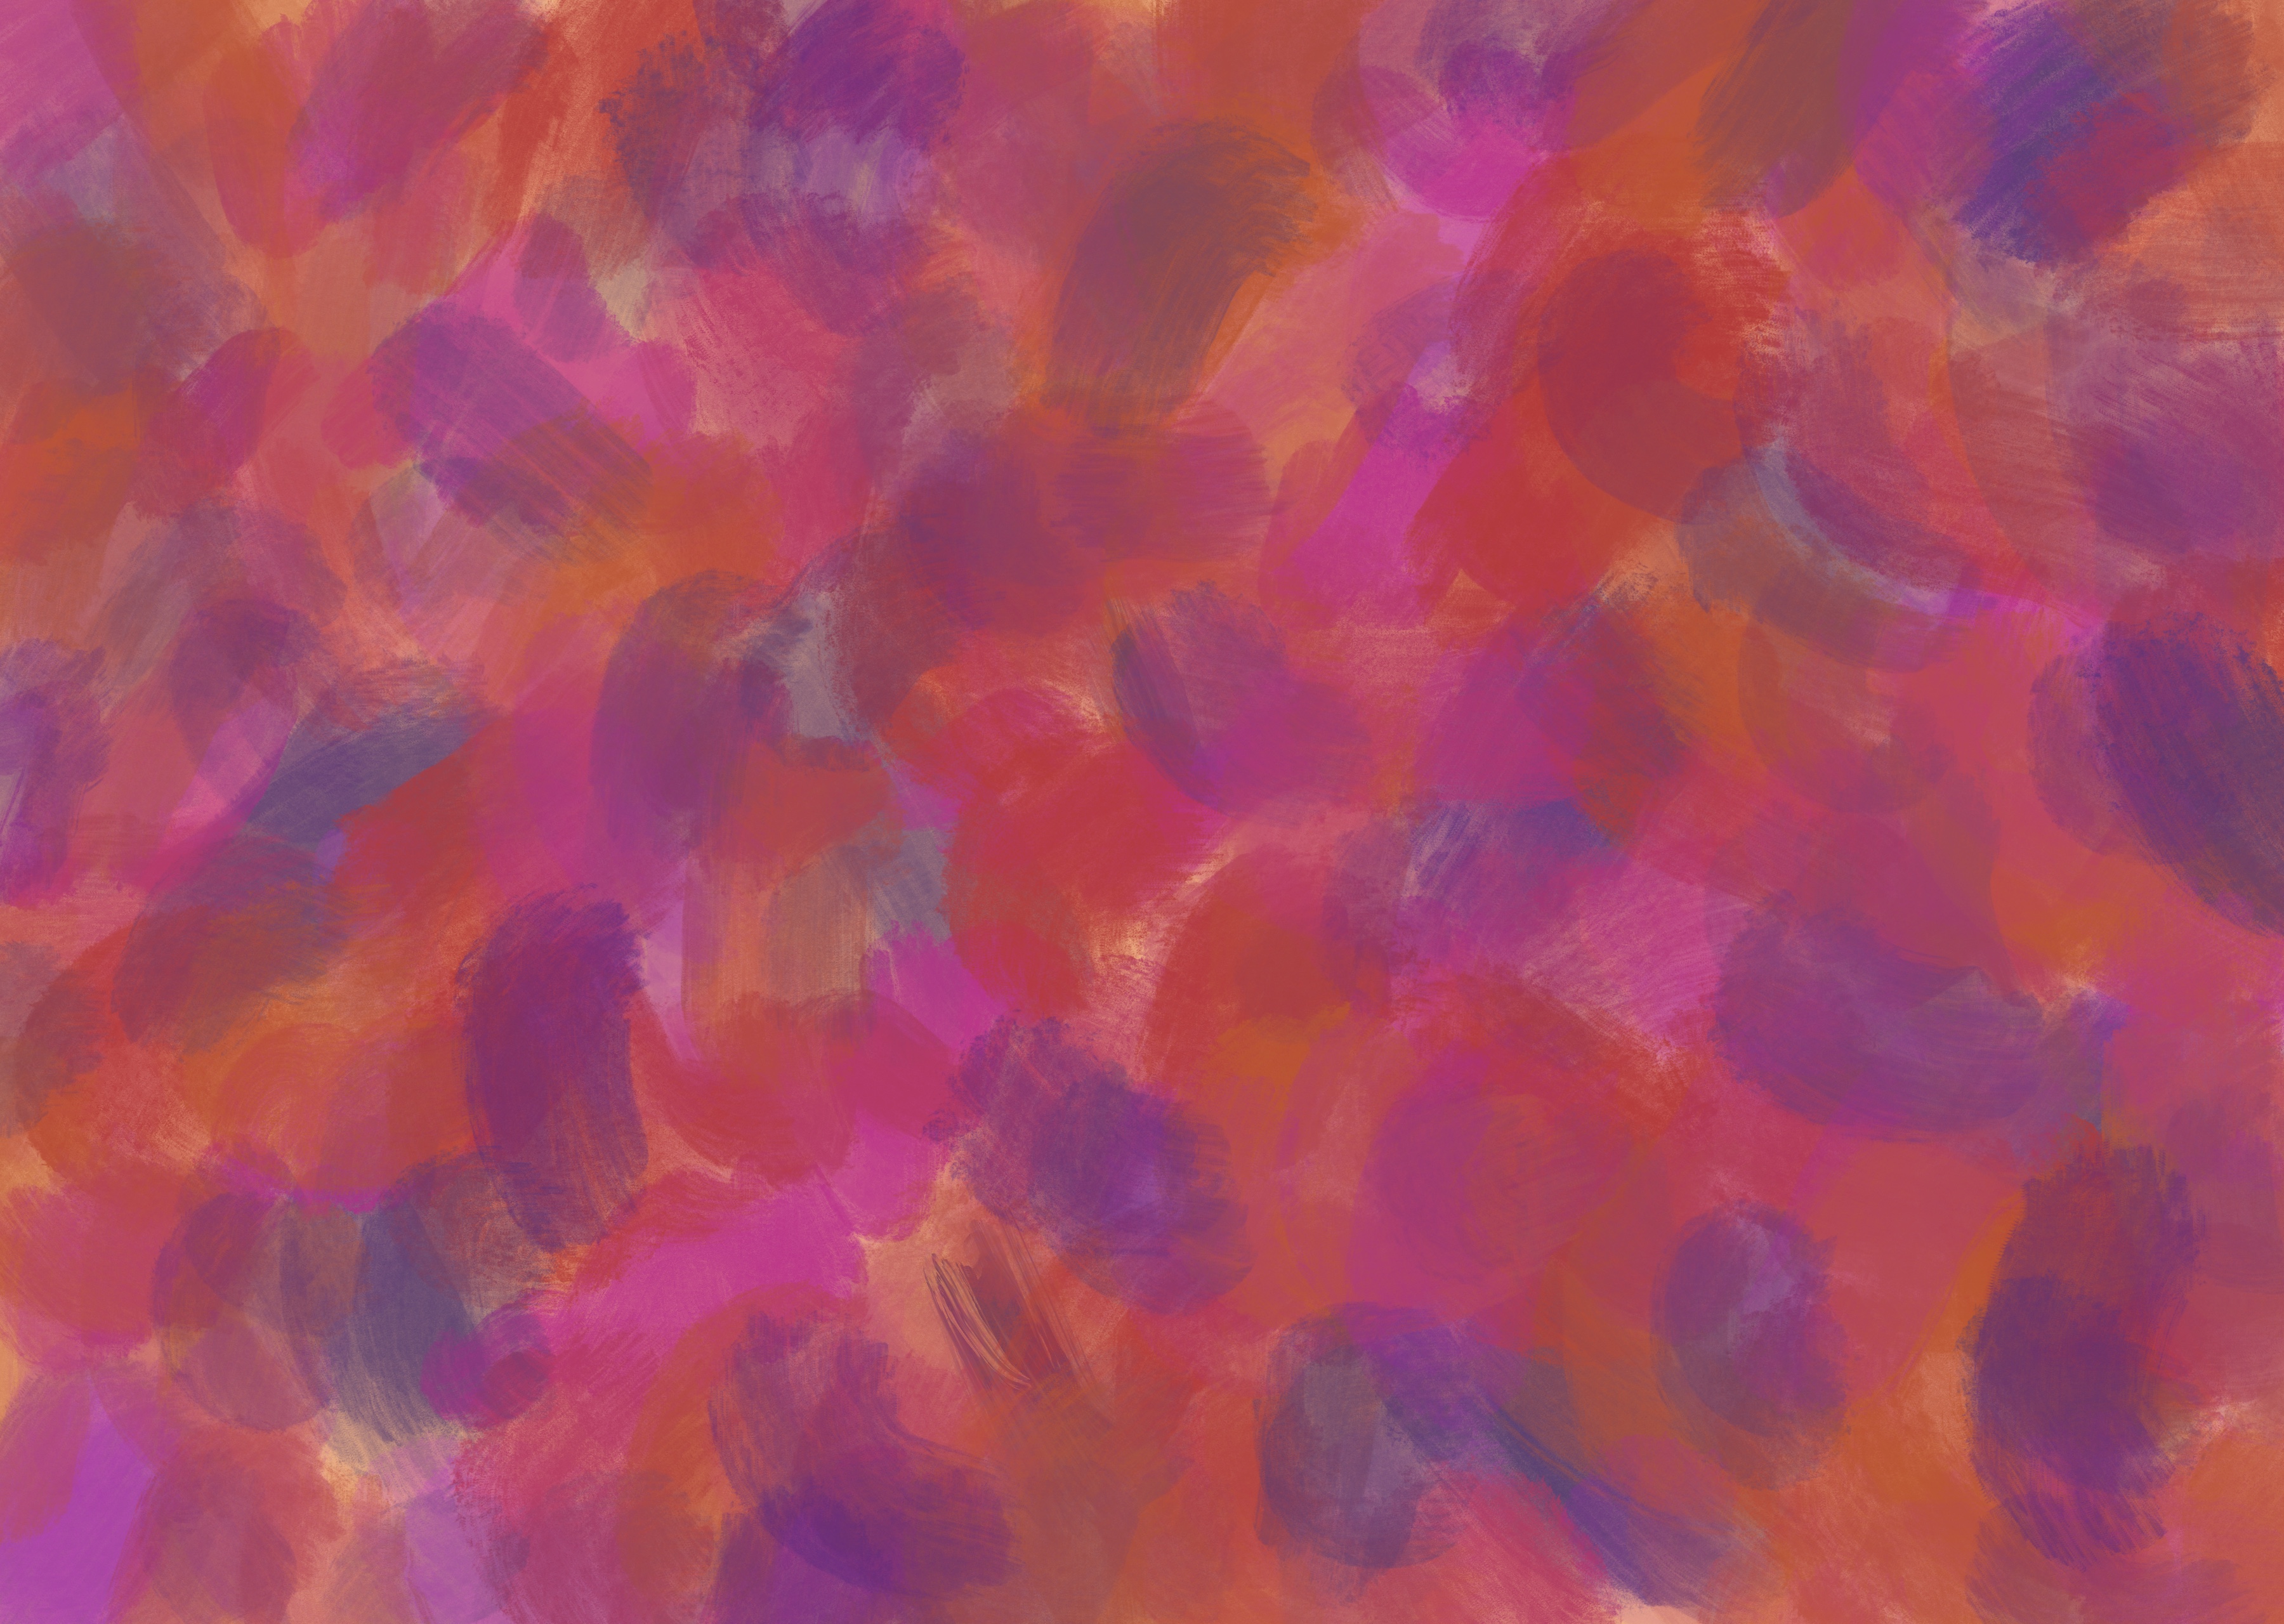 splotches of color: purple, pink, orange